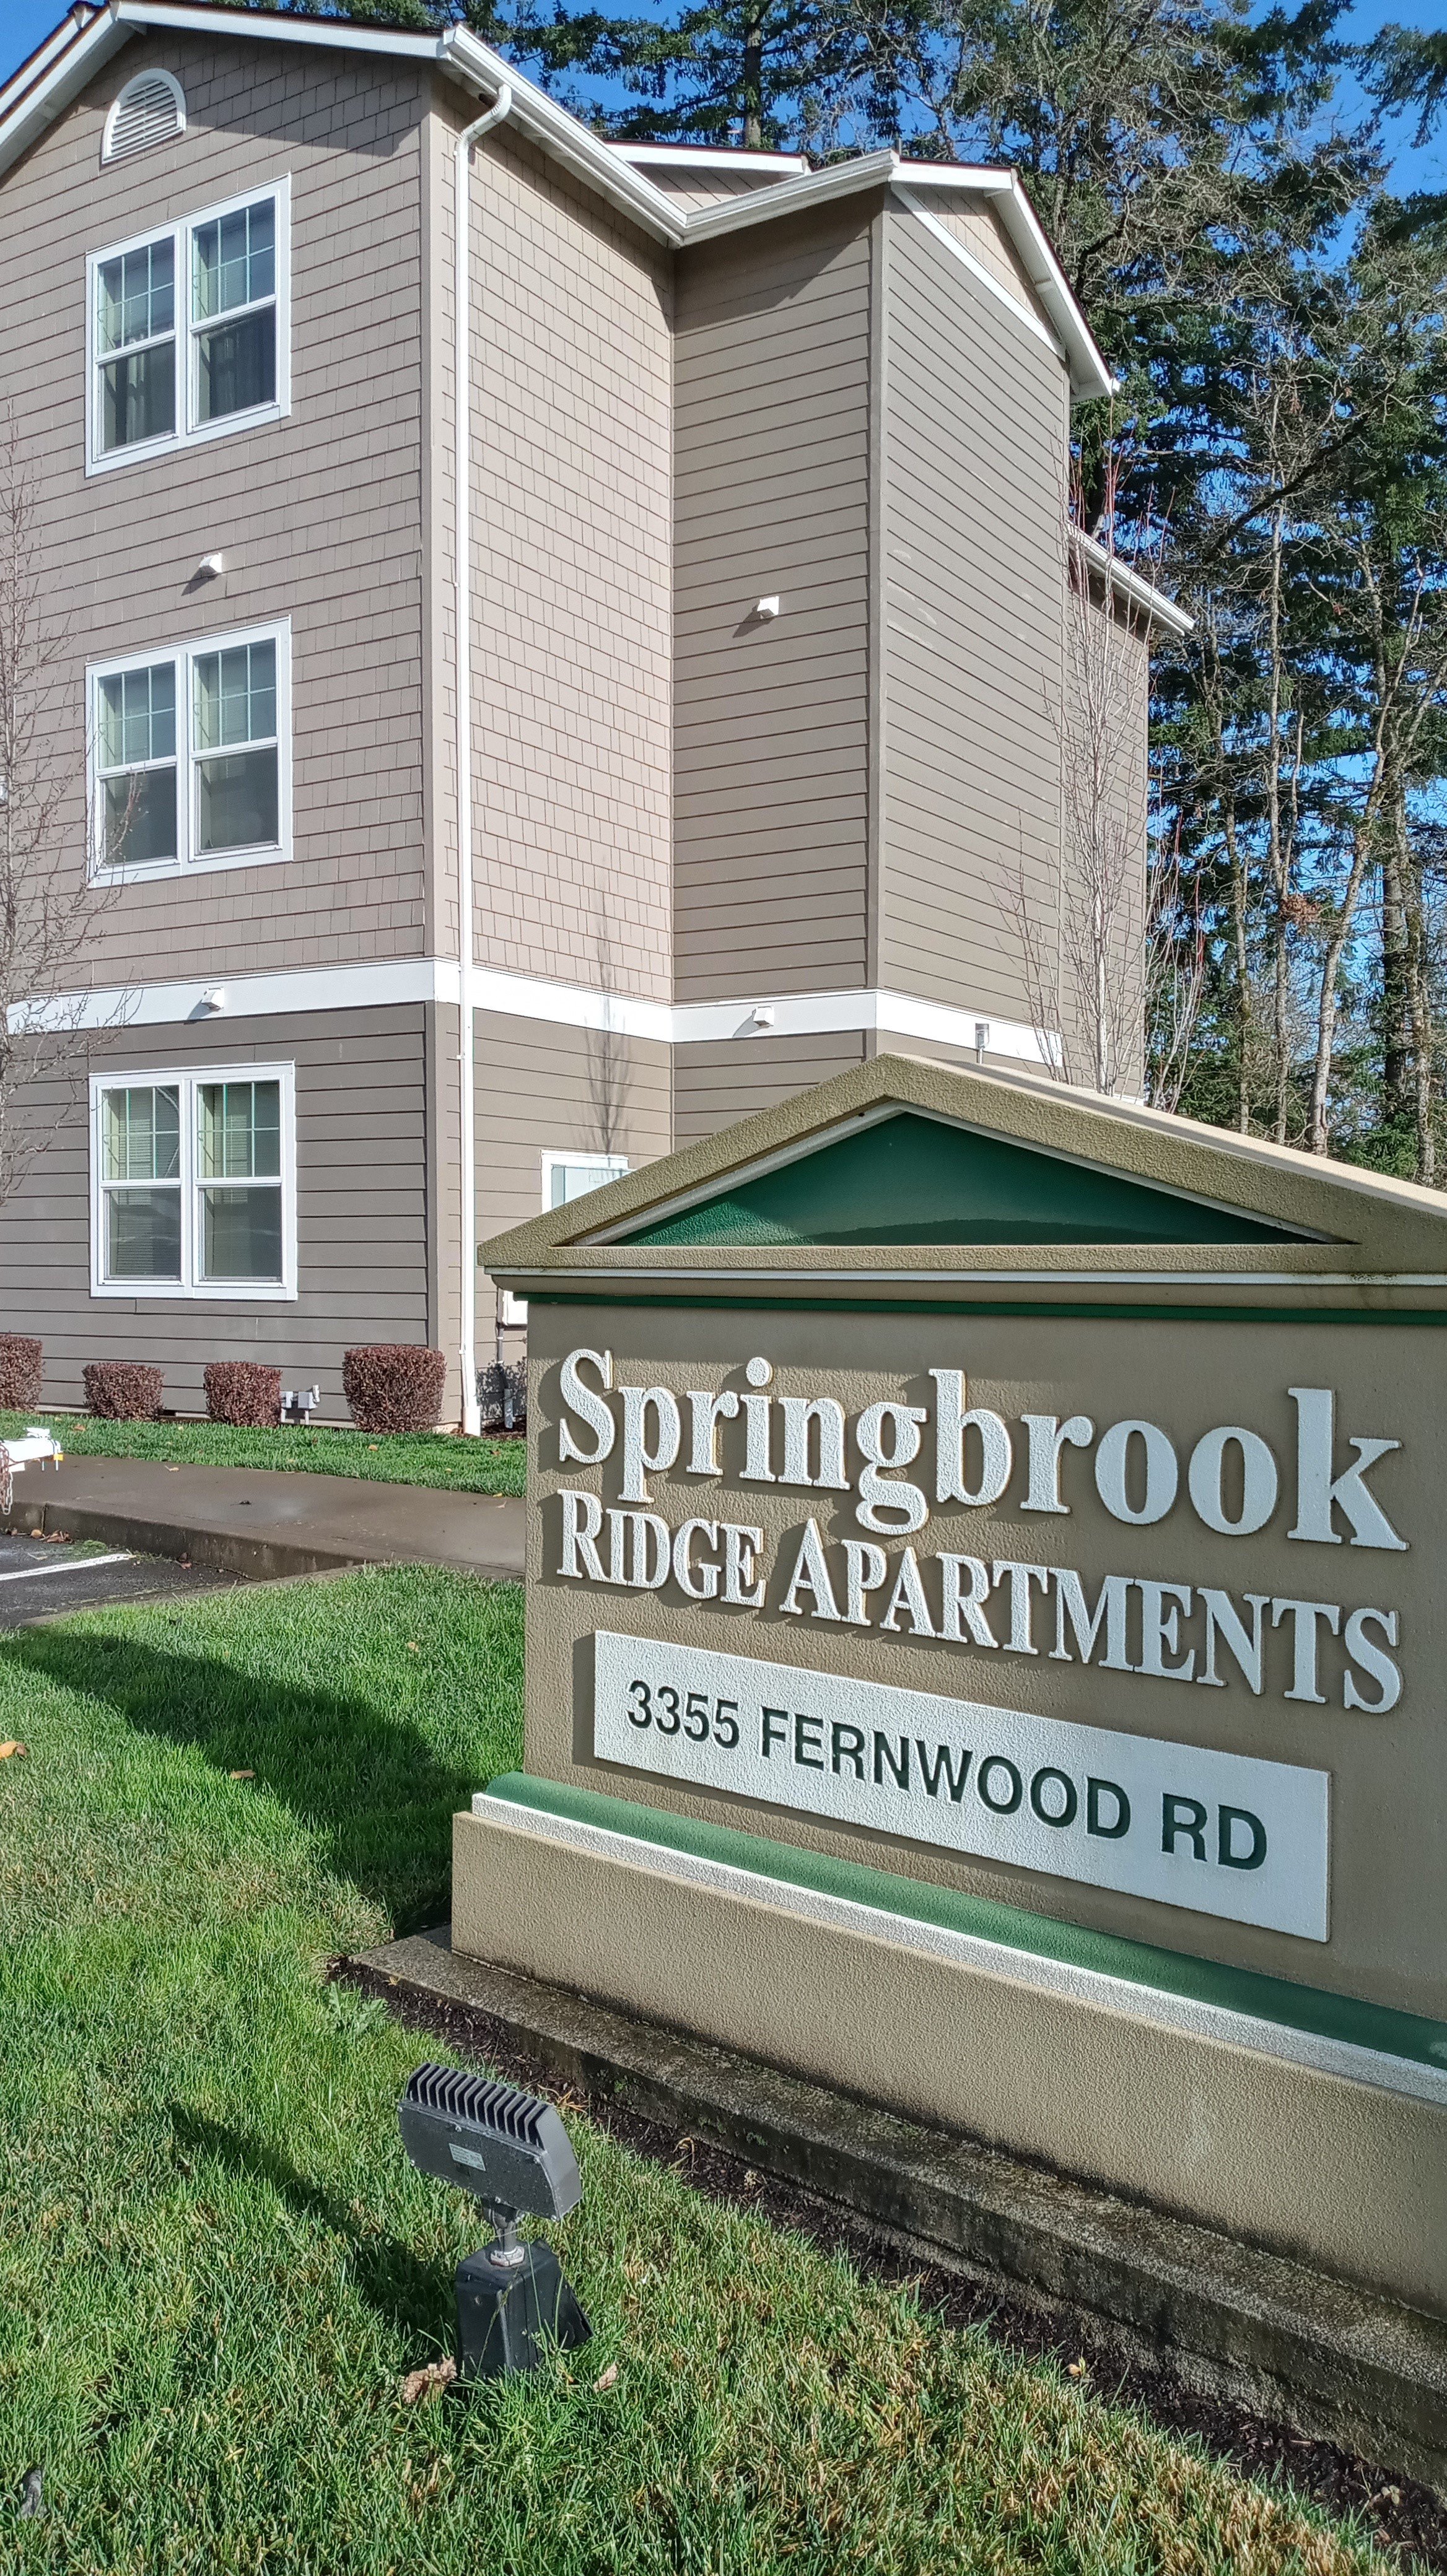 Springbrook Ridge Apartments